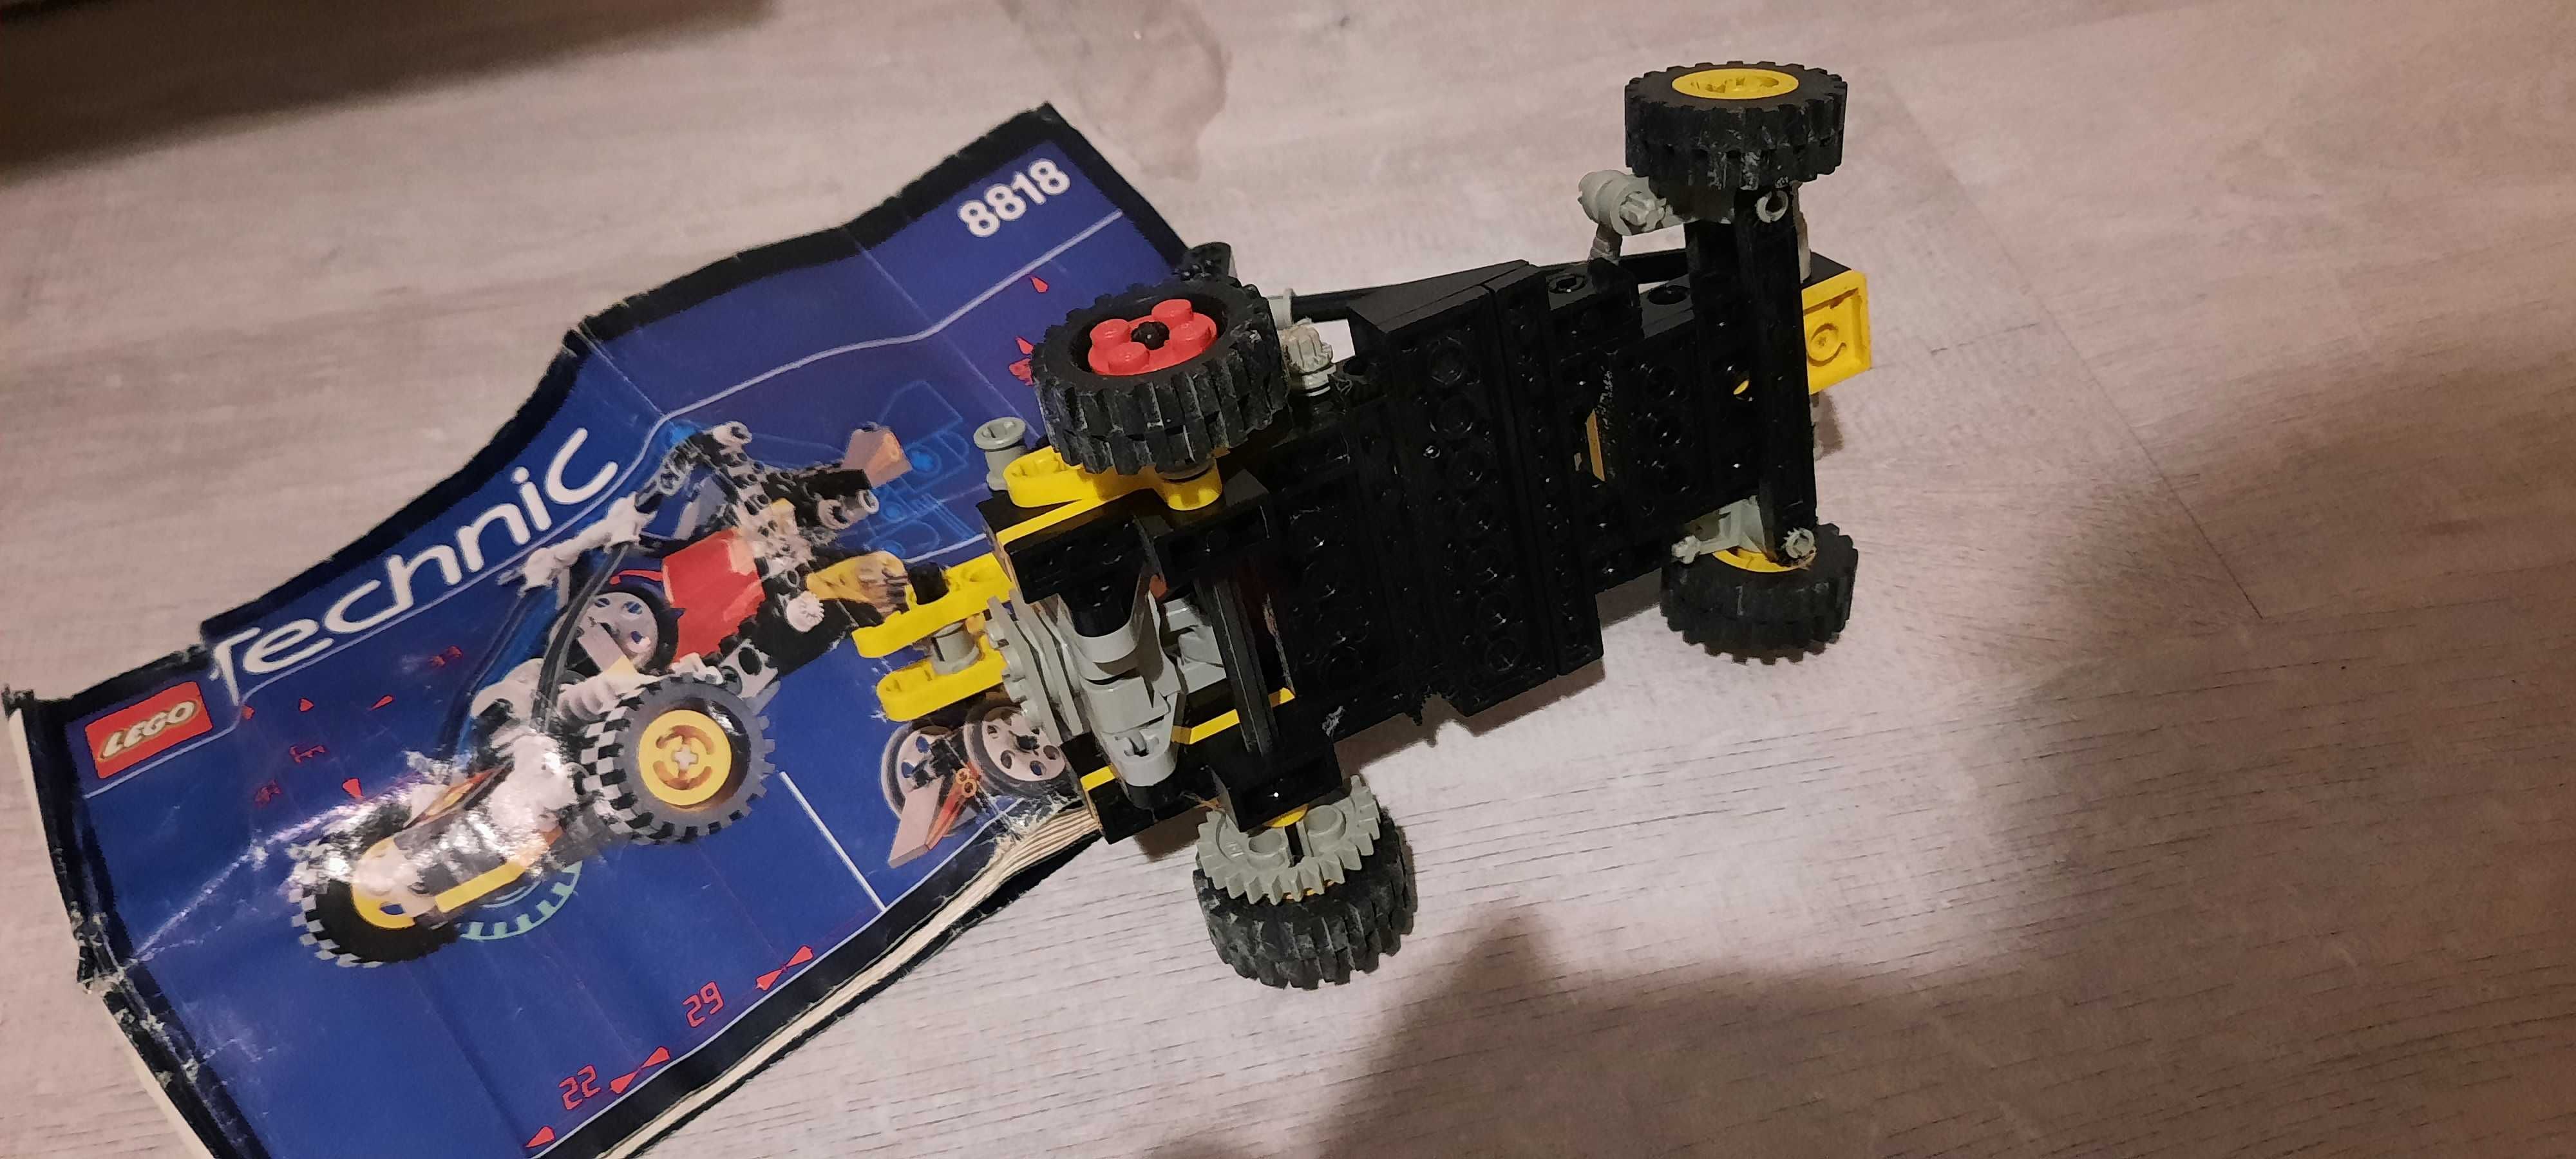 Lego Technic 8818